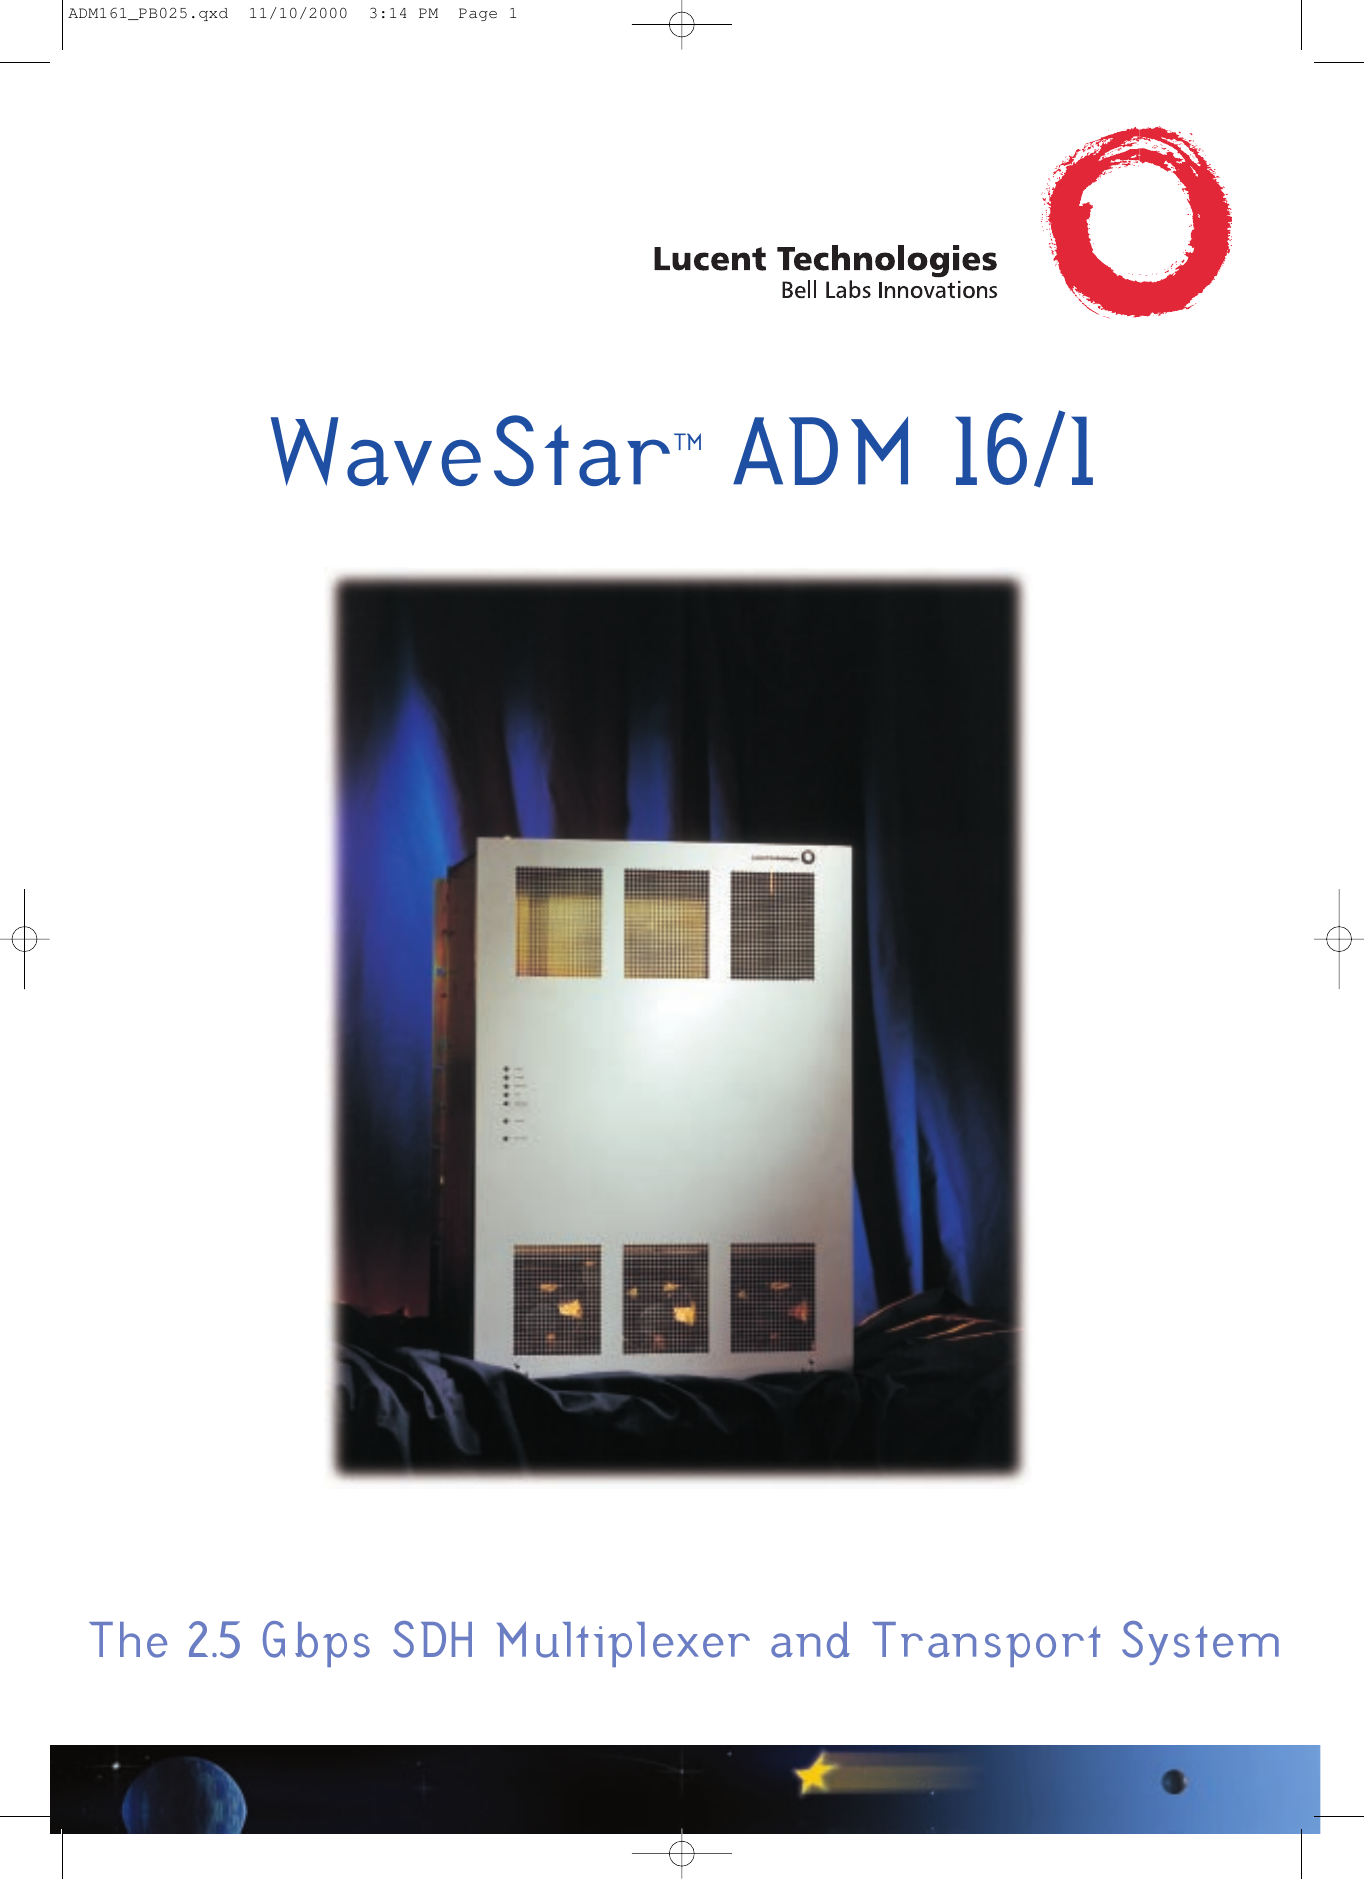 download wavestar software